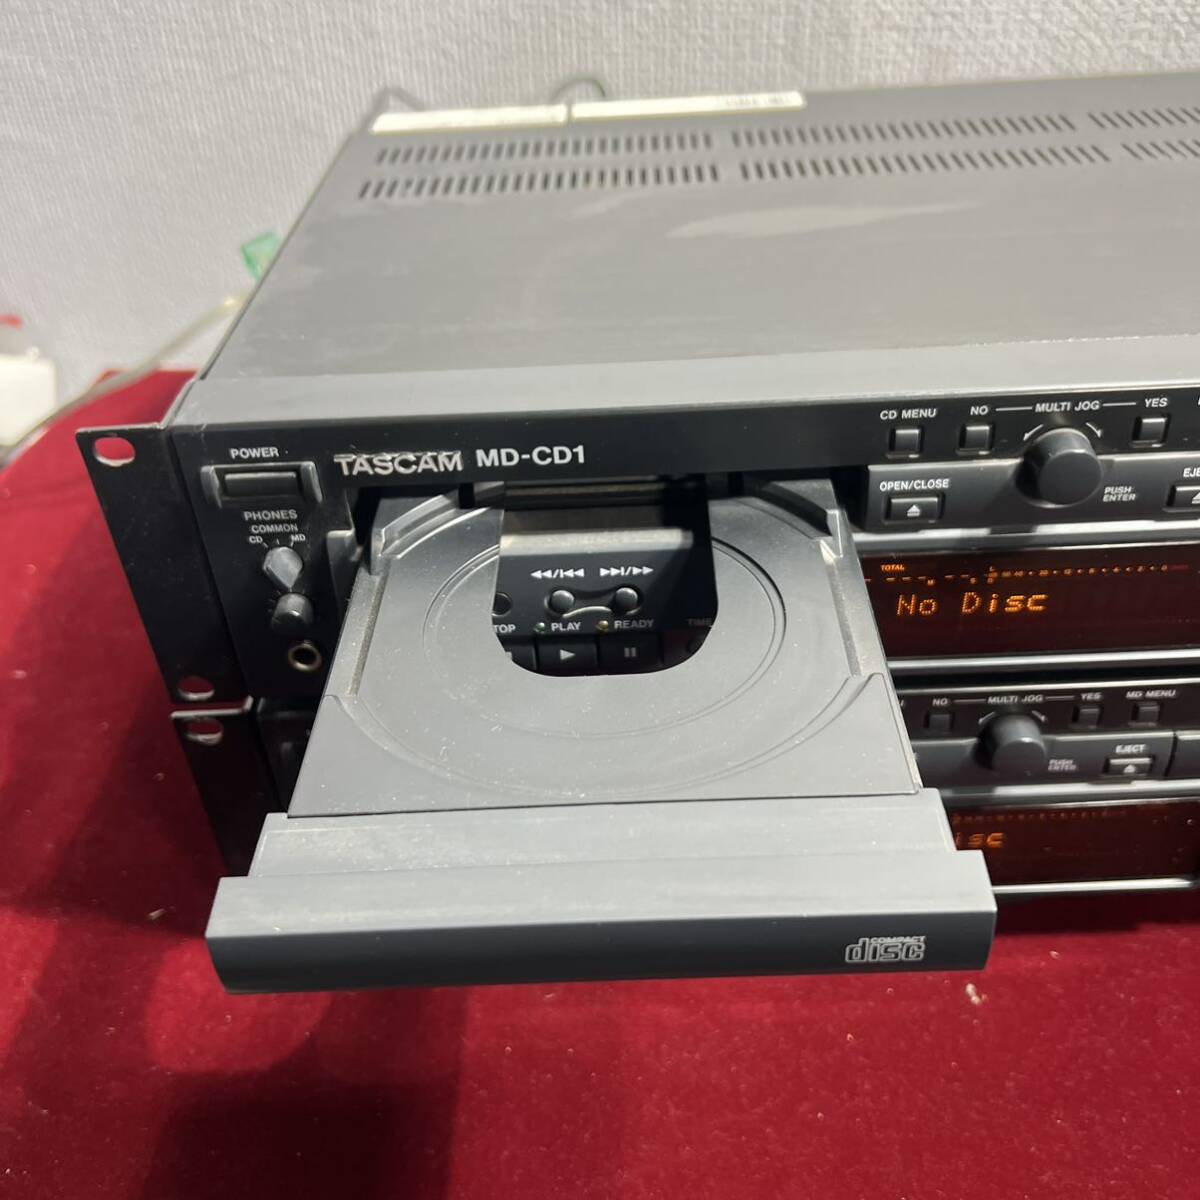 f277 278 TASCAM MD-CD1 business use CD player MD recorder Junk 2 pcs. set 